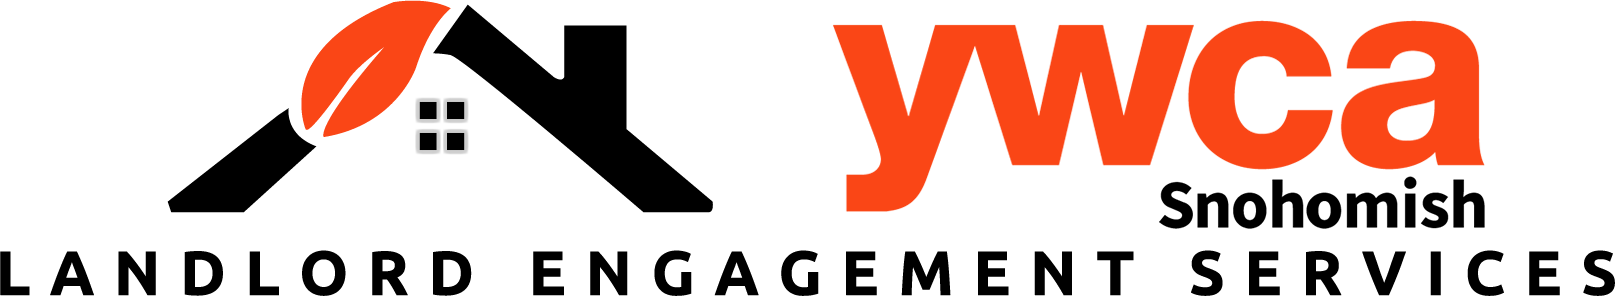 Landlord Engagement Services, YWCA, Snohomish logo